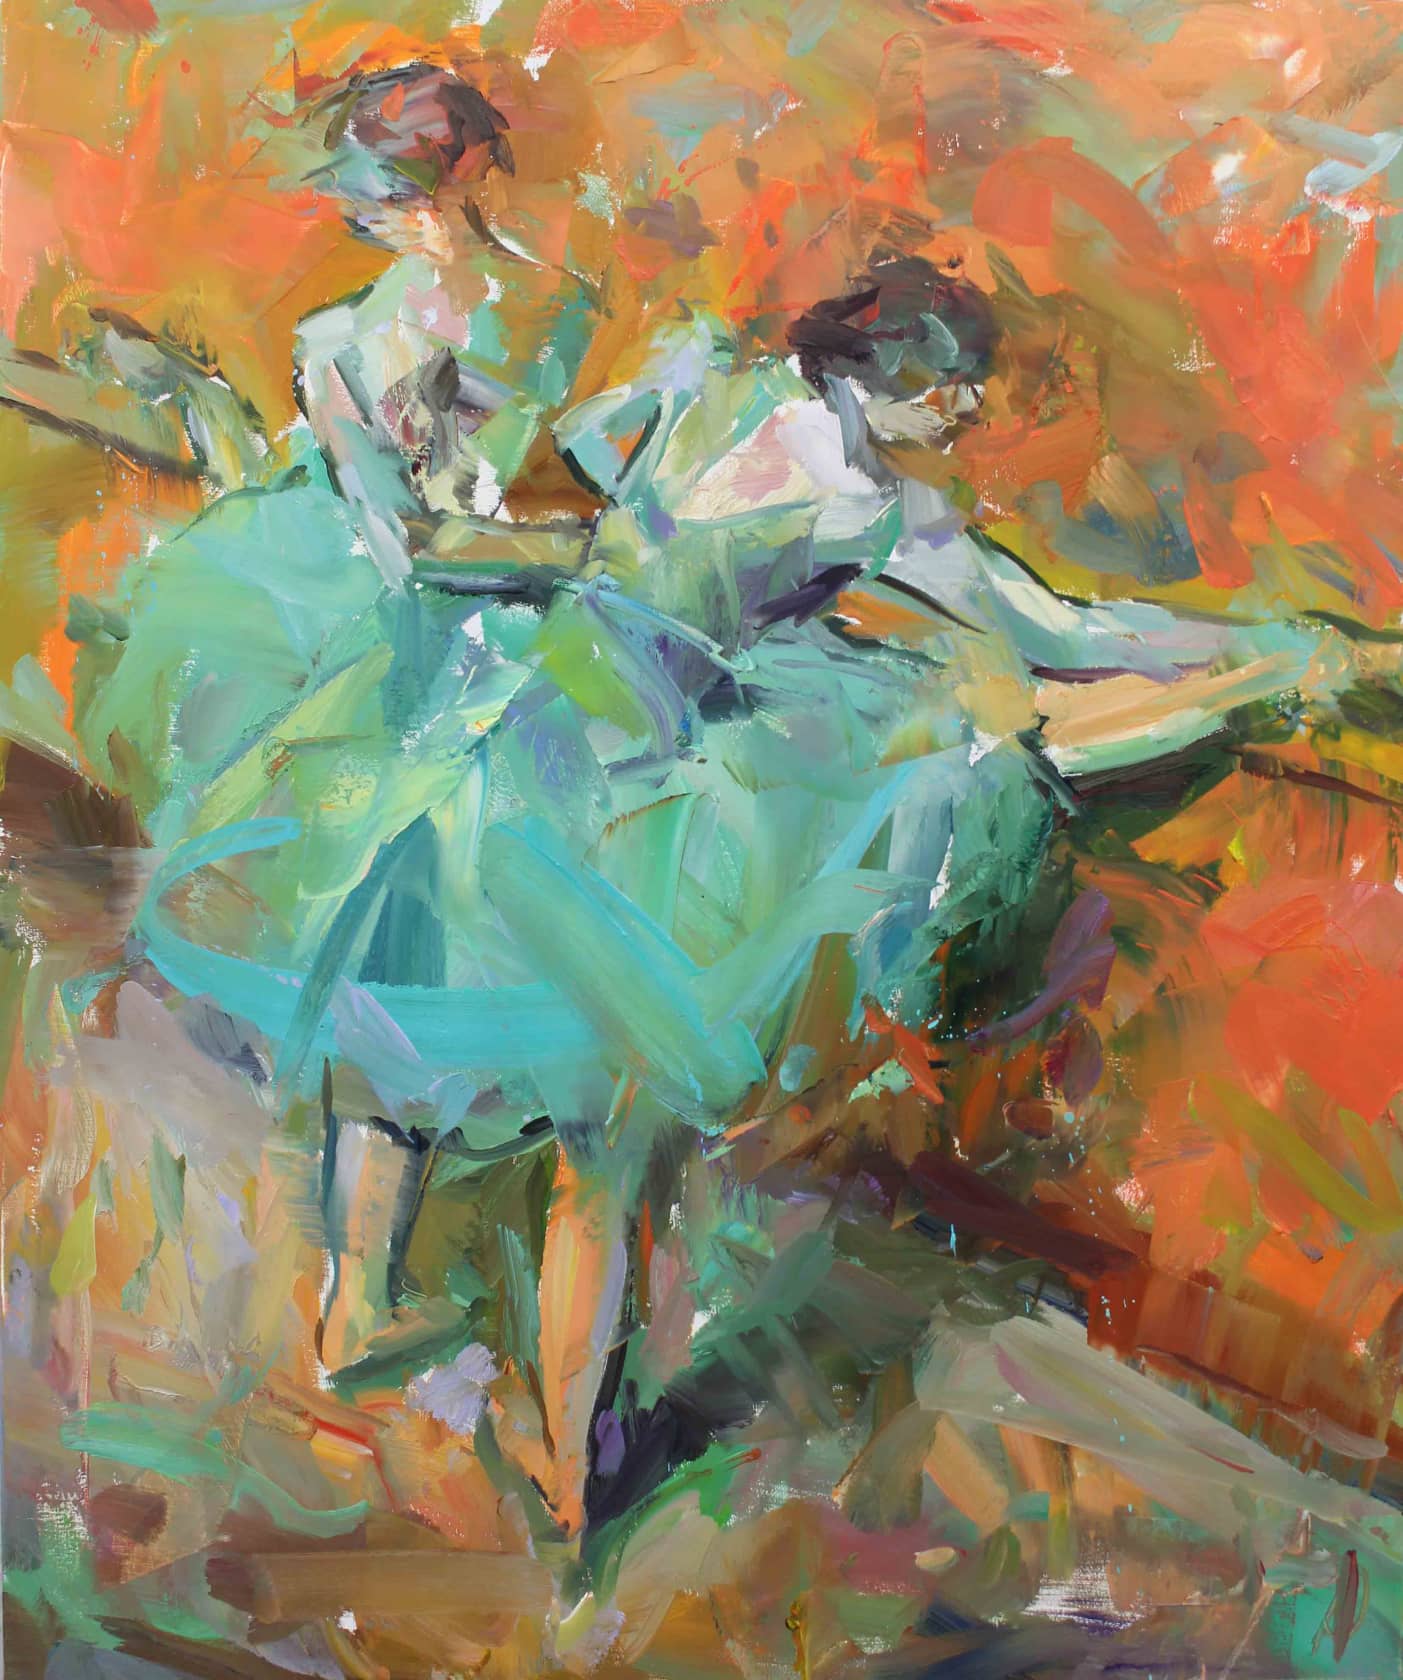 Paul Wright, Ballerina 1 (Tribute to Degas), 2017